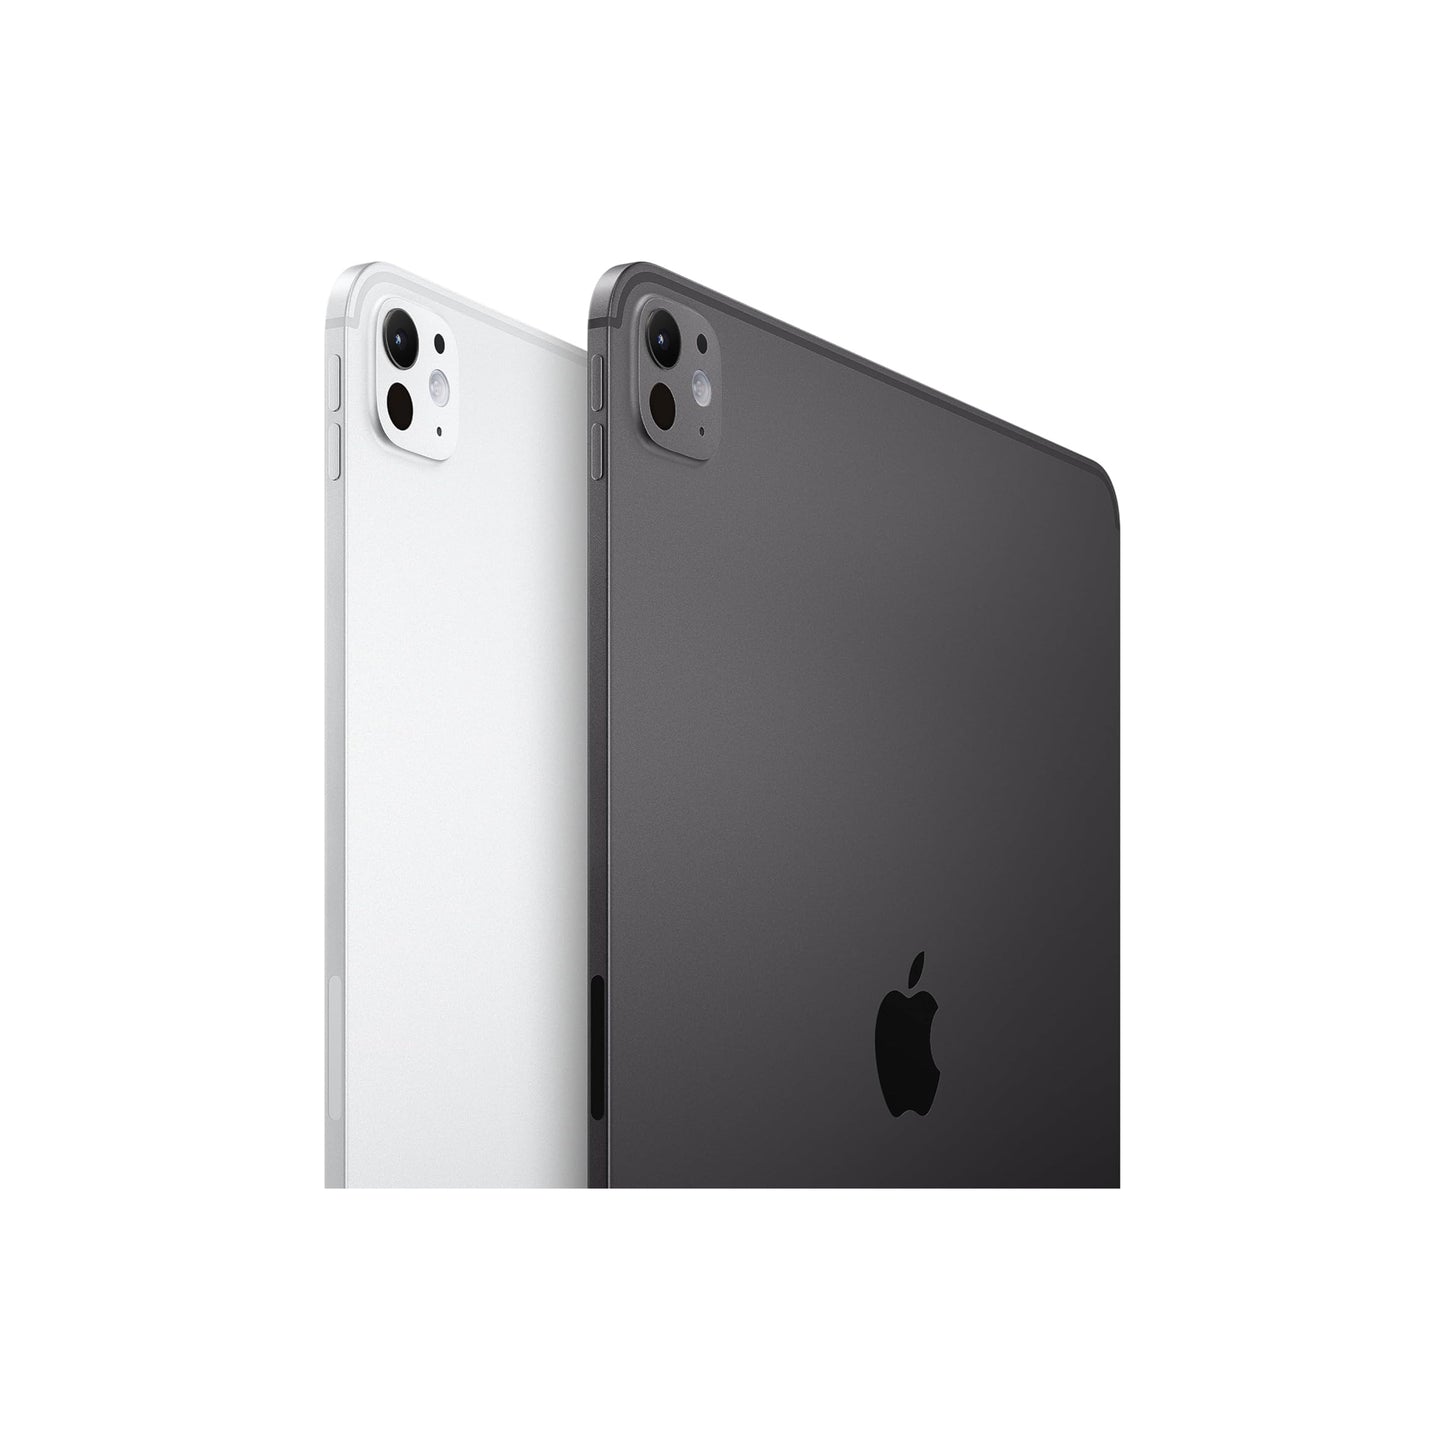 Apple iPad Pro 11 بوصة (M4): شاشة Ultra Retina XDR، 1 تيرابايت، كاميرا أمامية 12 ميجابكسل / كاميرا خلفية 12 ميجابكسل، ماسح ضوئي LiDAR، شبكة Wi-Fi 6E + 5G خلوية مع eSIM، معرف الوجه، عمر البطارية طوال اليوم - أسود فلكي